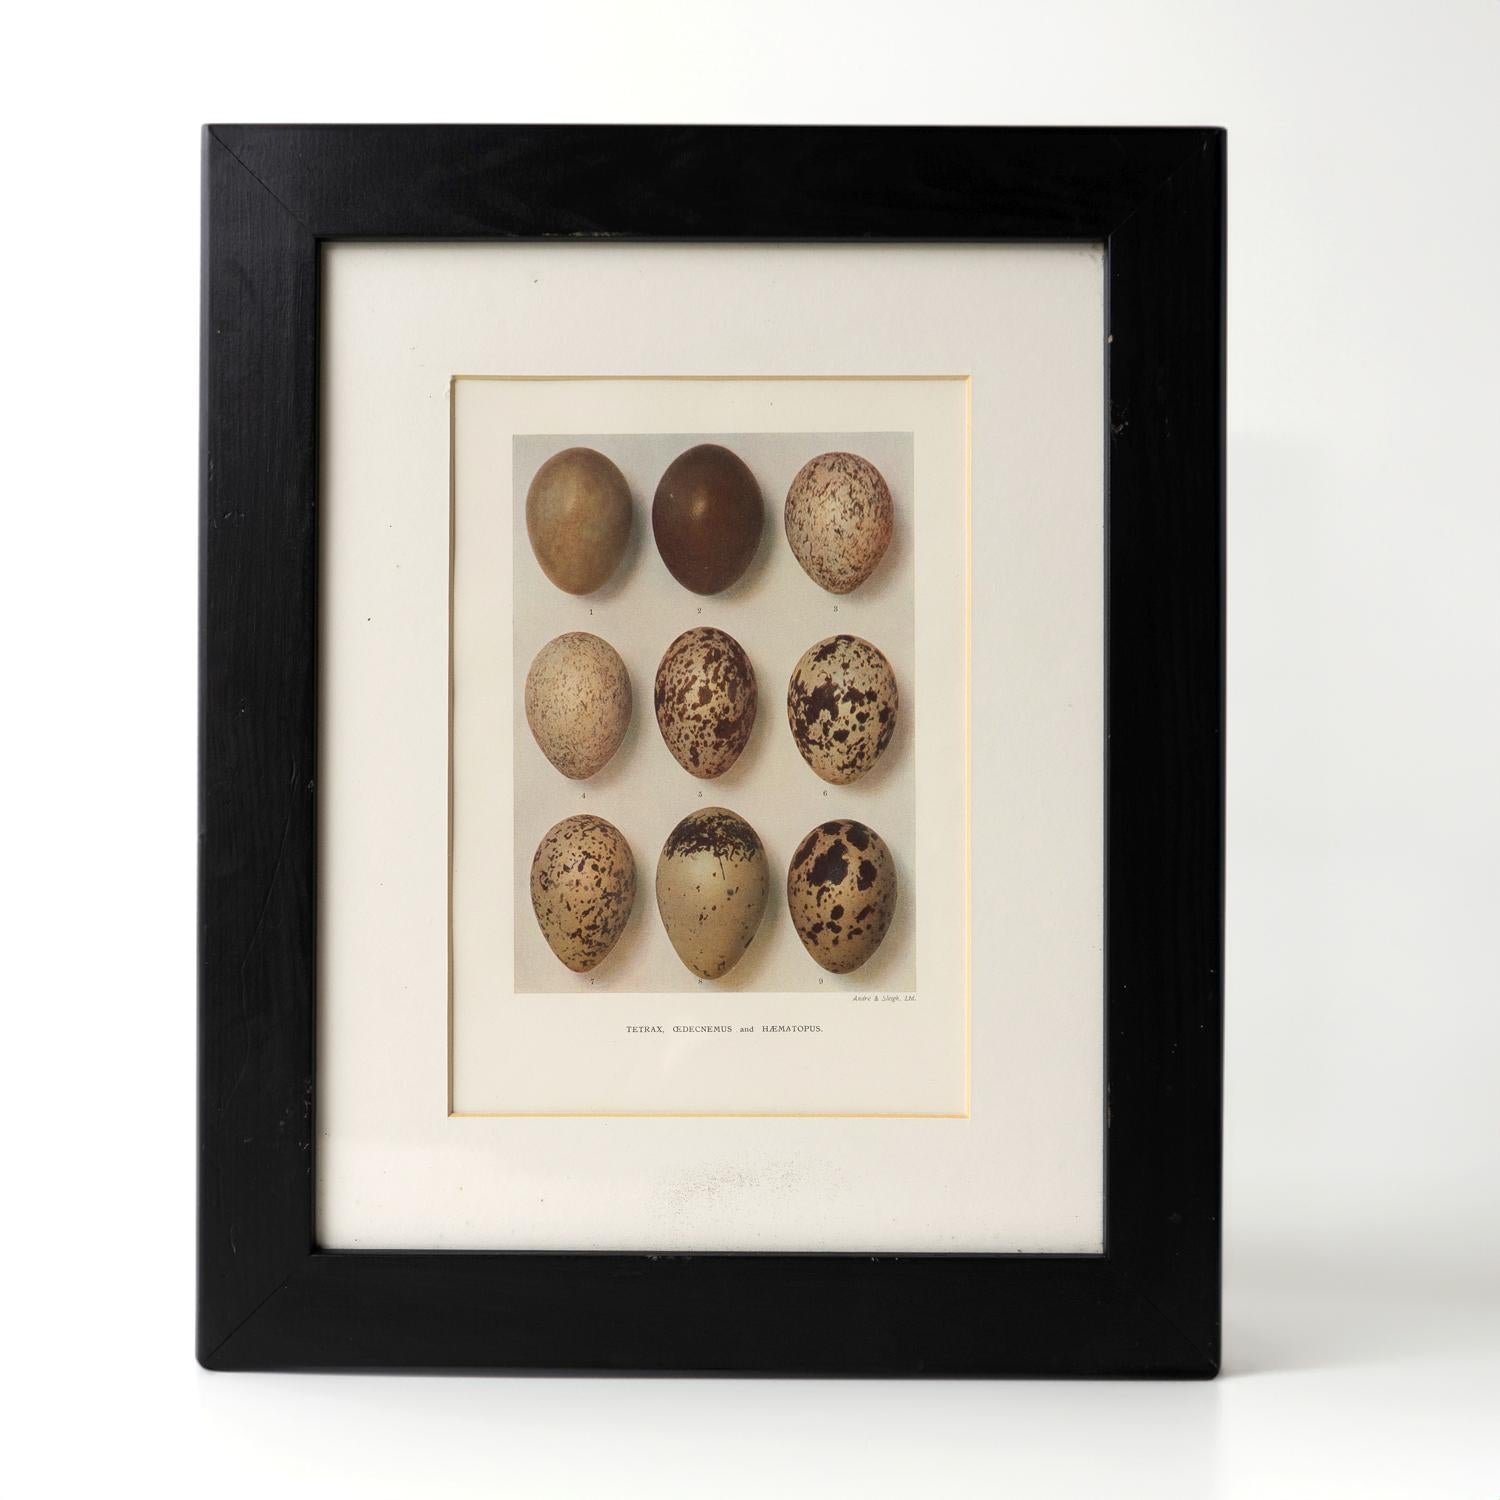 Paper Set Of Four Antique Chromolithograph Prints Depicting Bird Egg Specimens, 1900